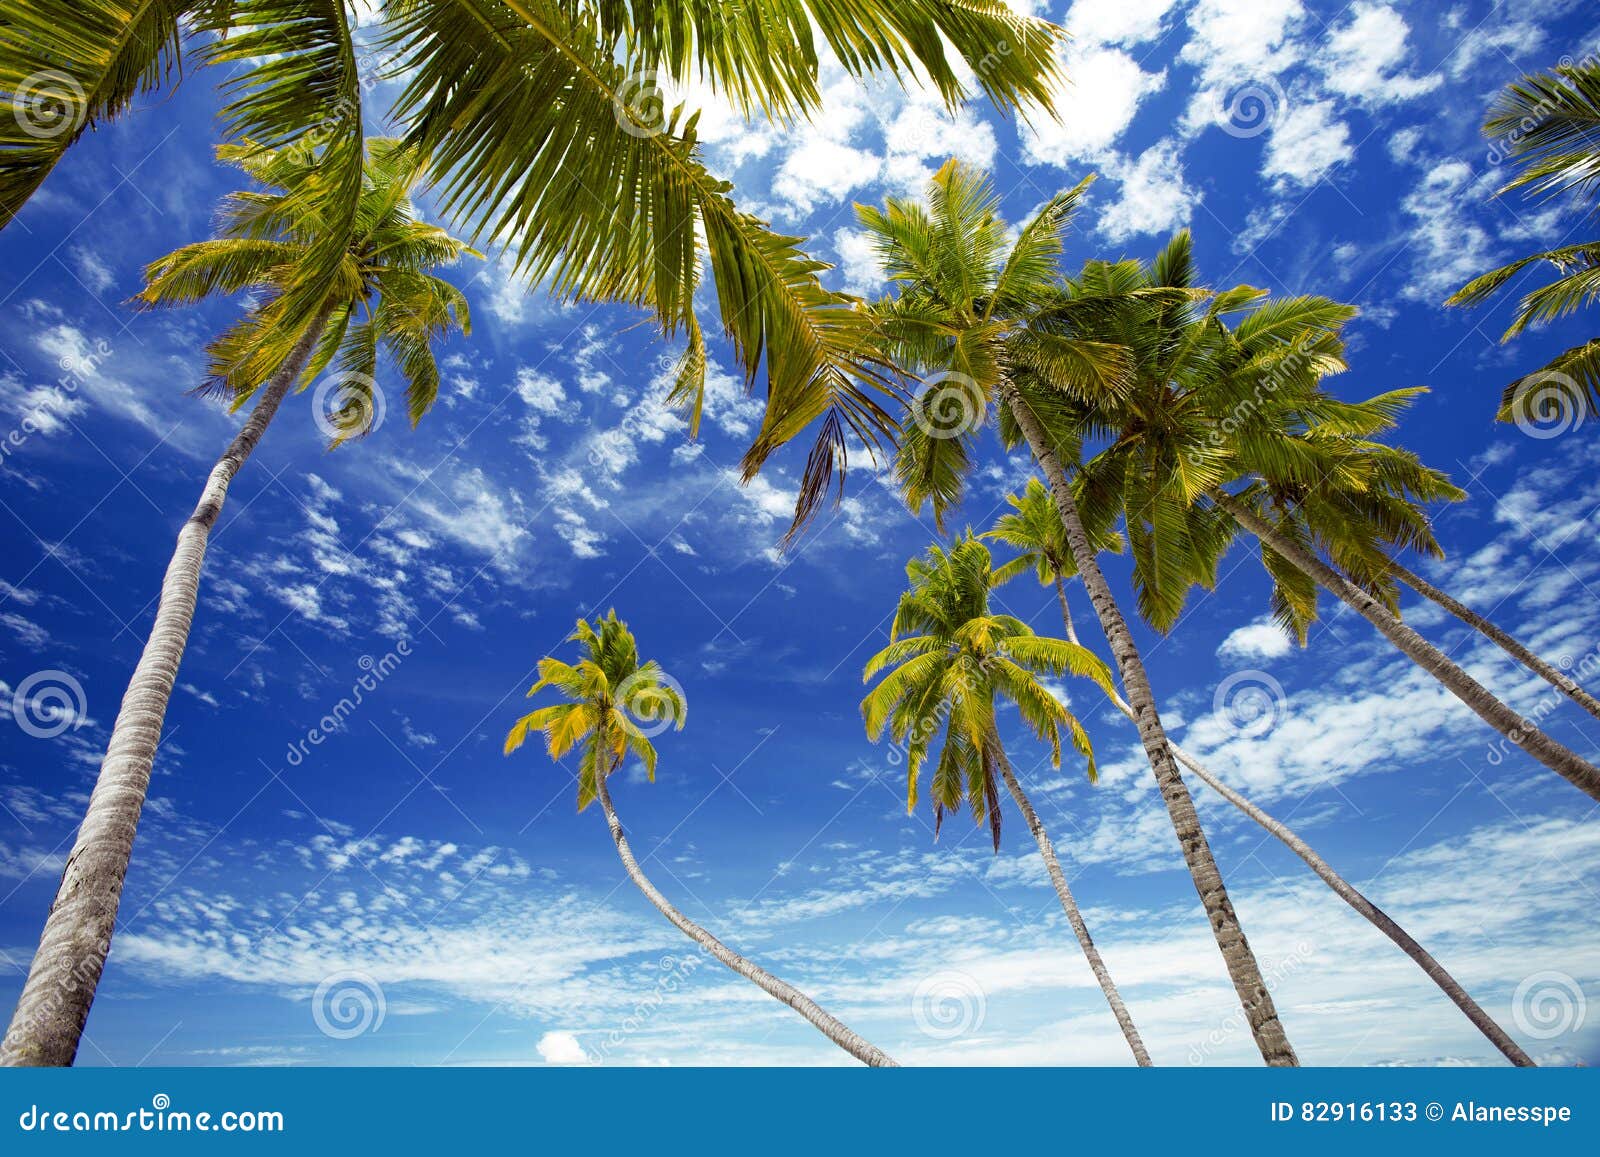 palmtrees and sky, maldives